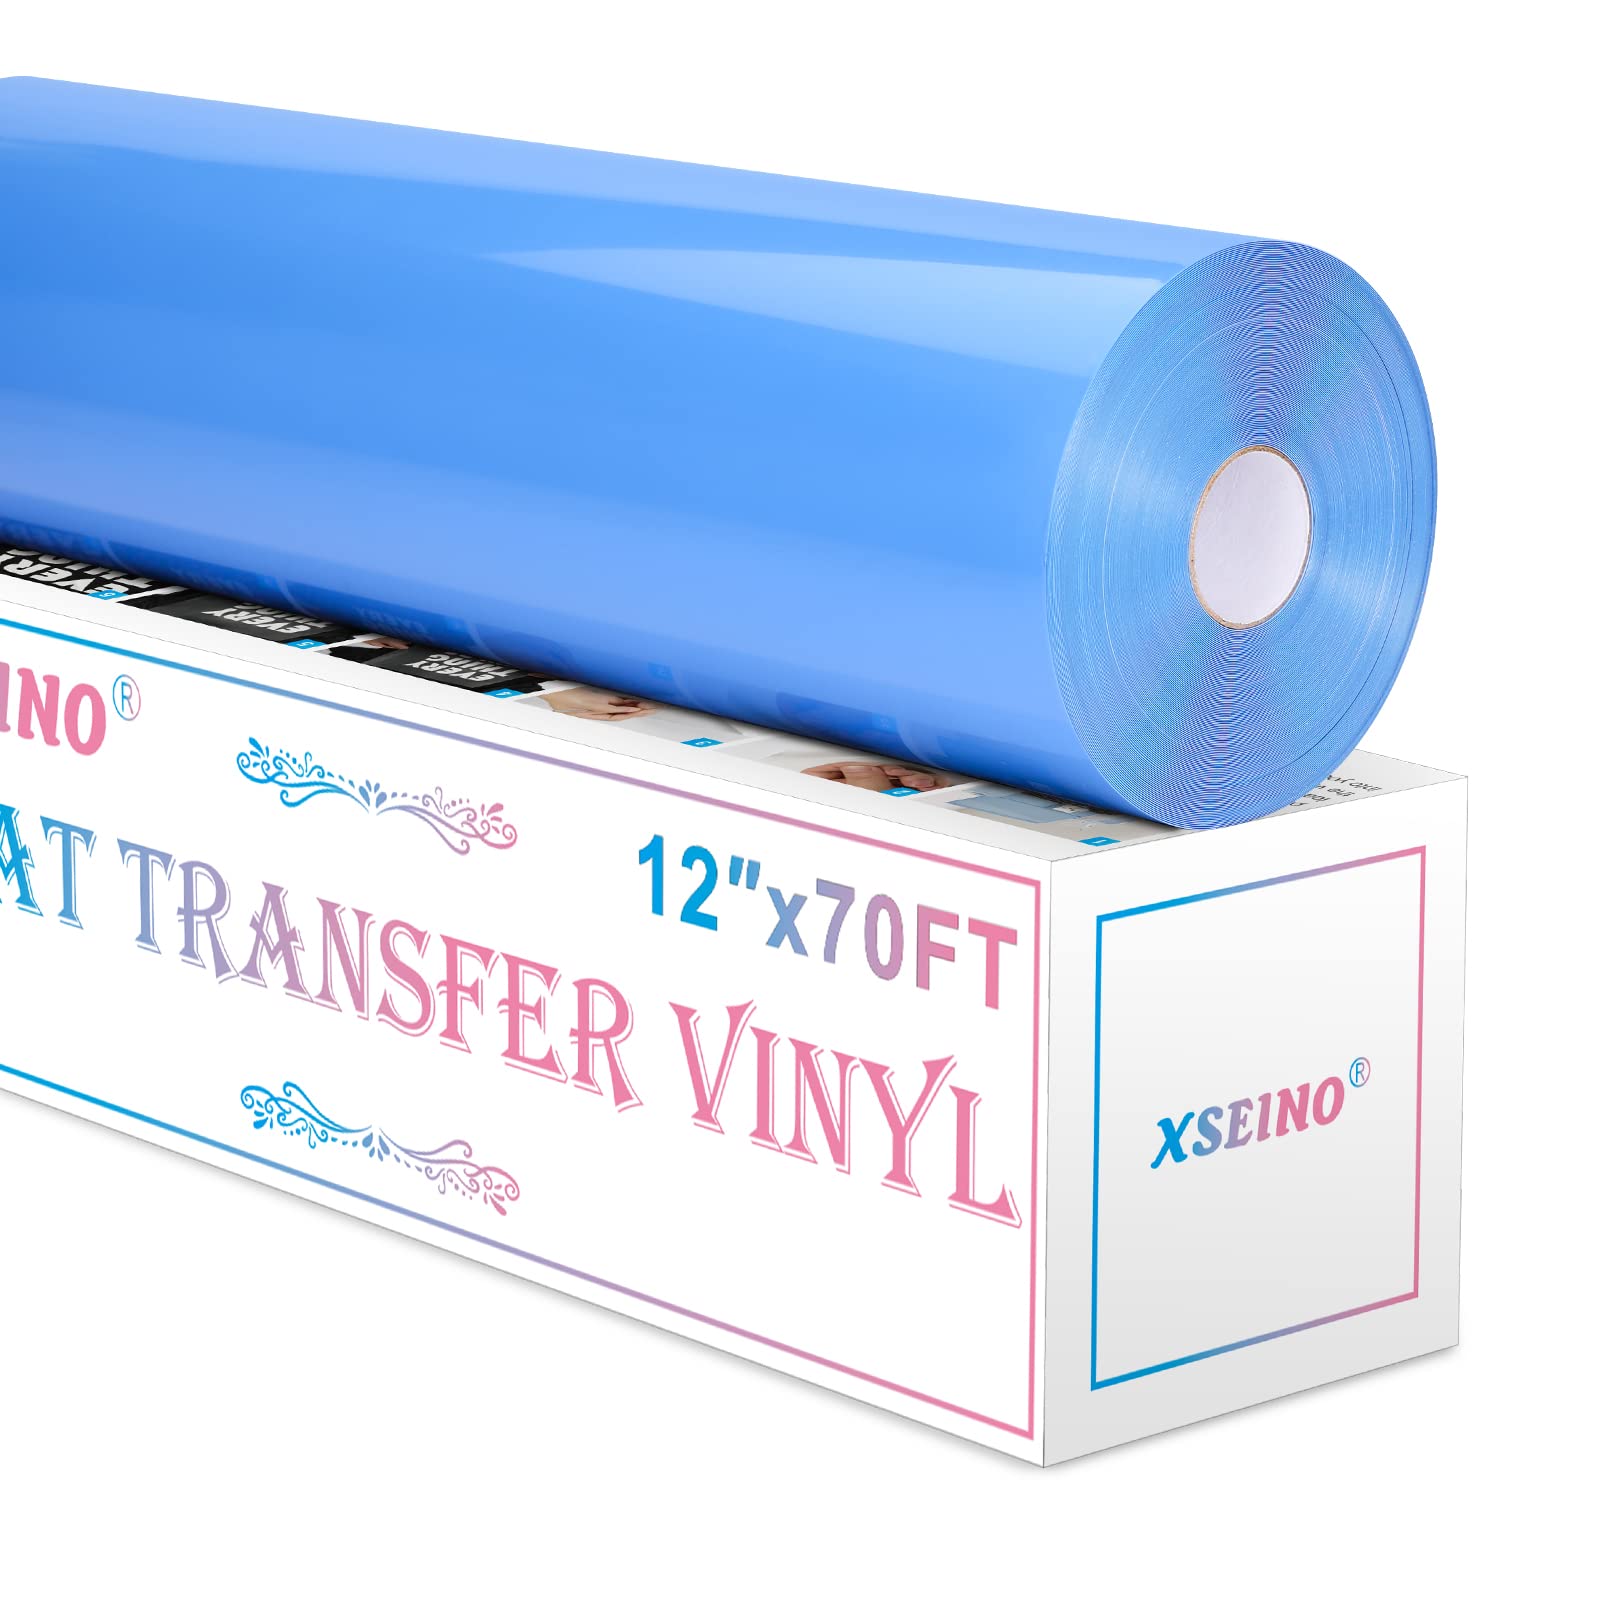 XSEINO Heat Transfer Vinyl Roll, 12 x 70FT PU HTV Vinyl Roll with Teflon for Shirts,SkyBlue Iron on Vinyl Roll for cricut and Al